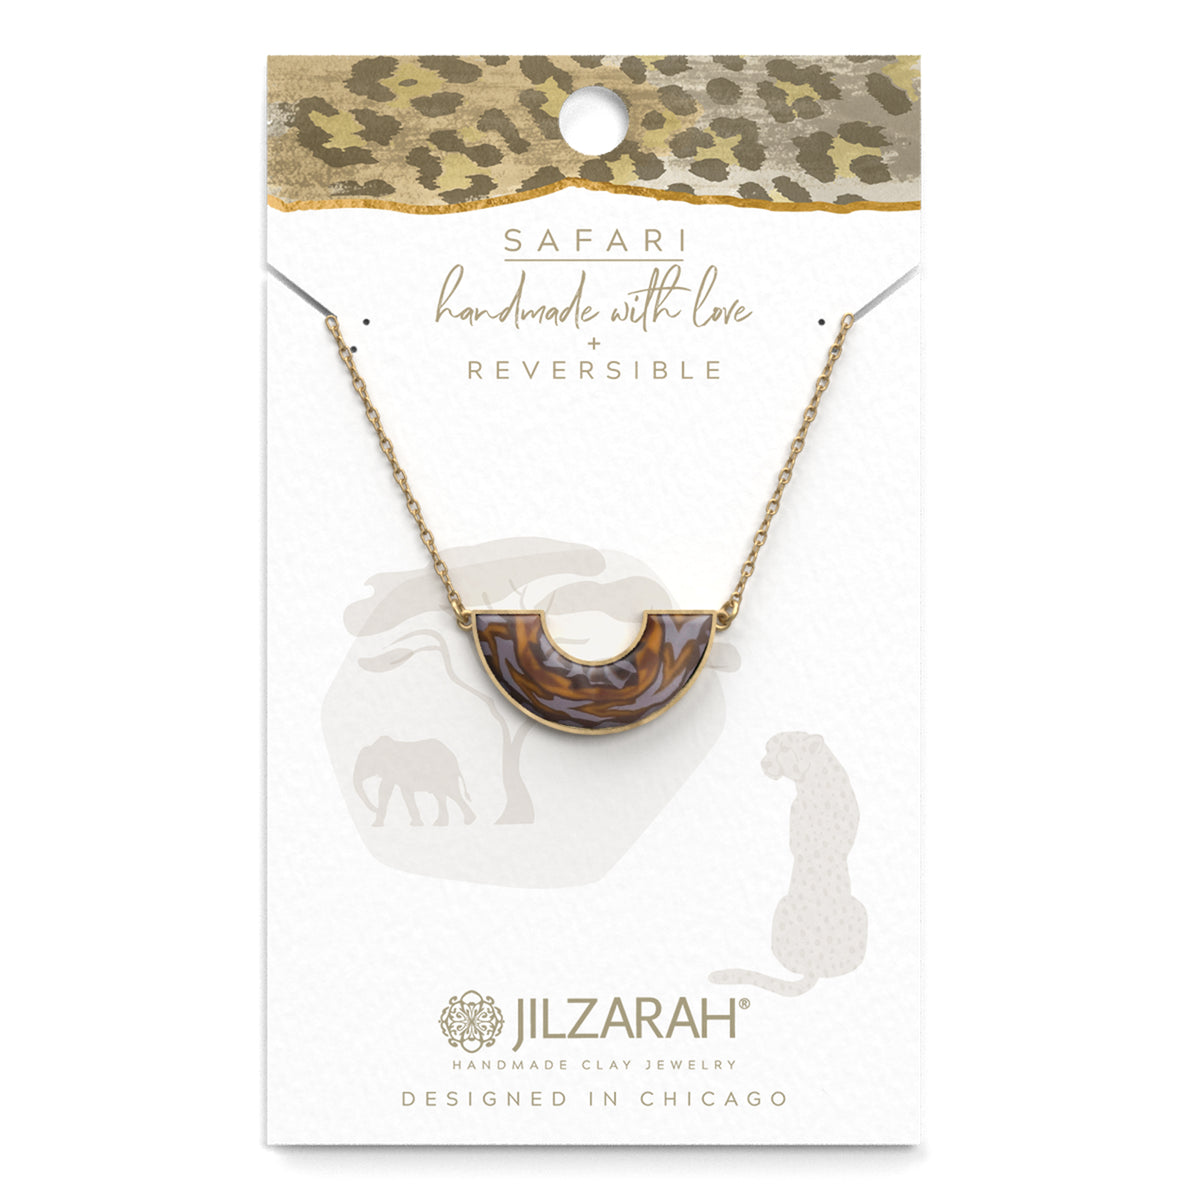 Safari Reversible Arc Necklace